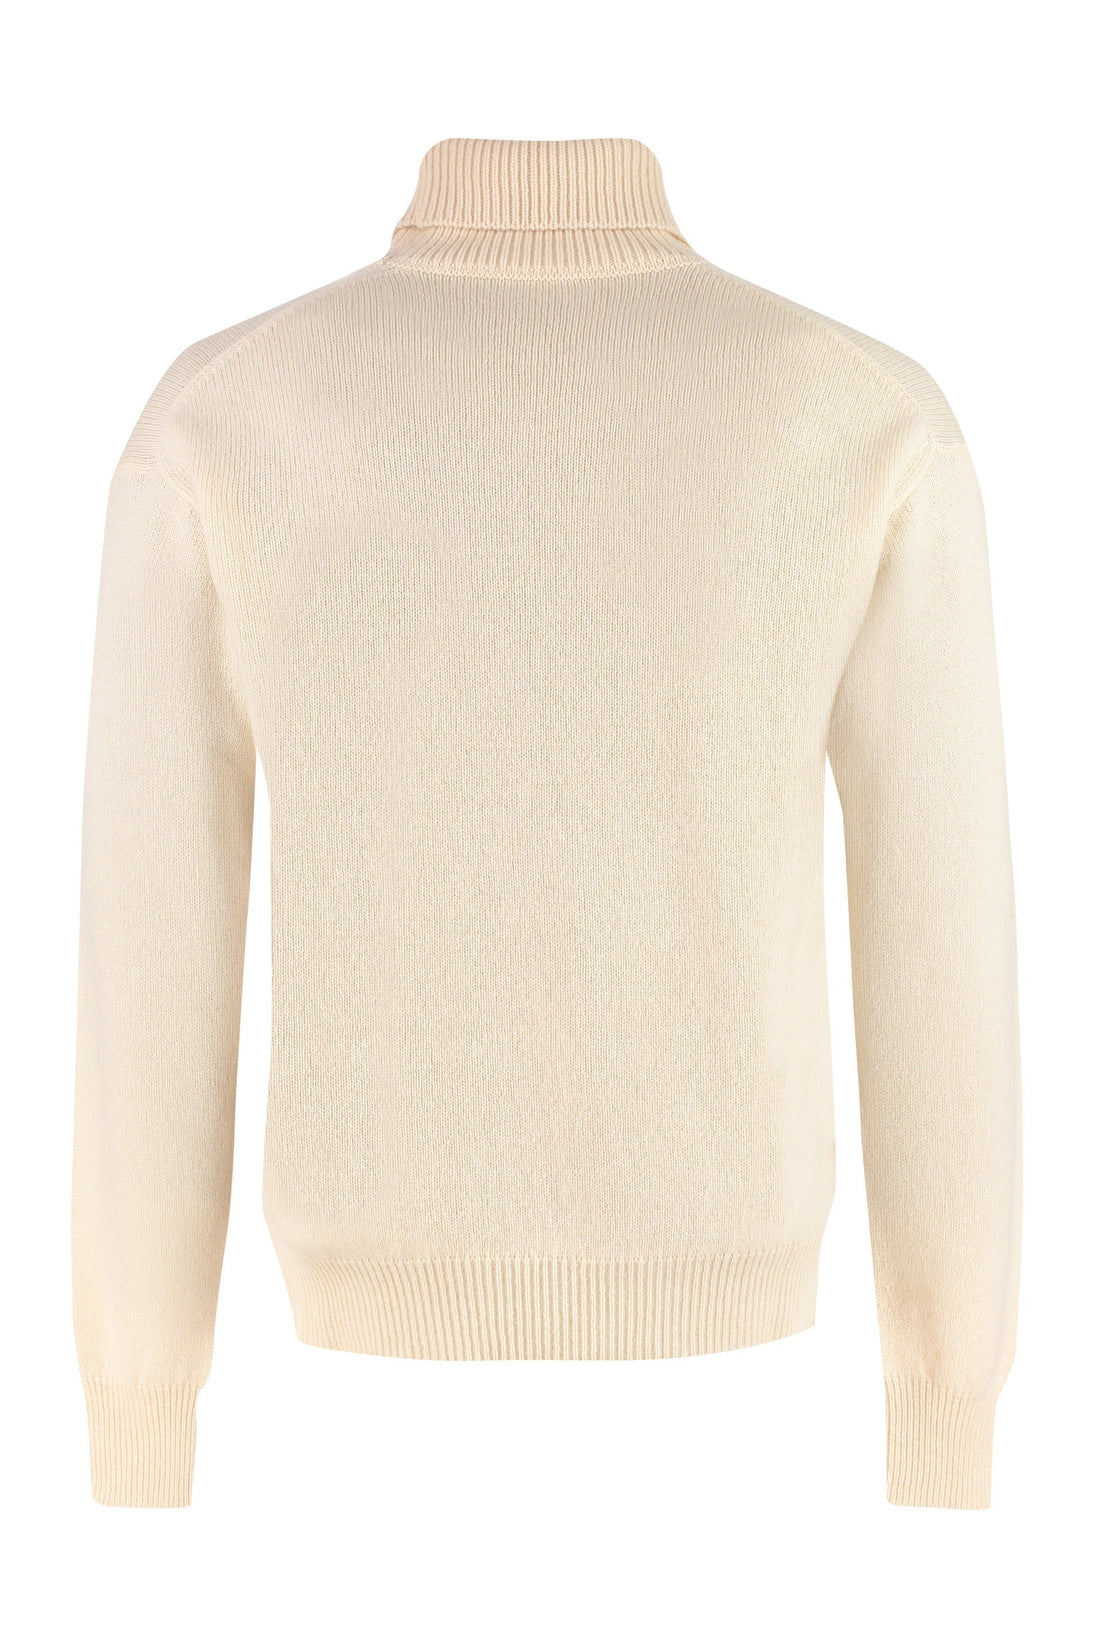 Jil Sander-OUTLET-SALE-Wool and cachemire turtleneck pullover-ARCHIVIST